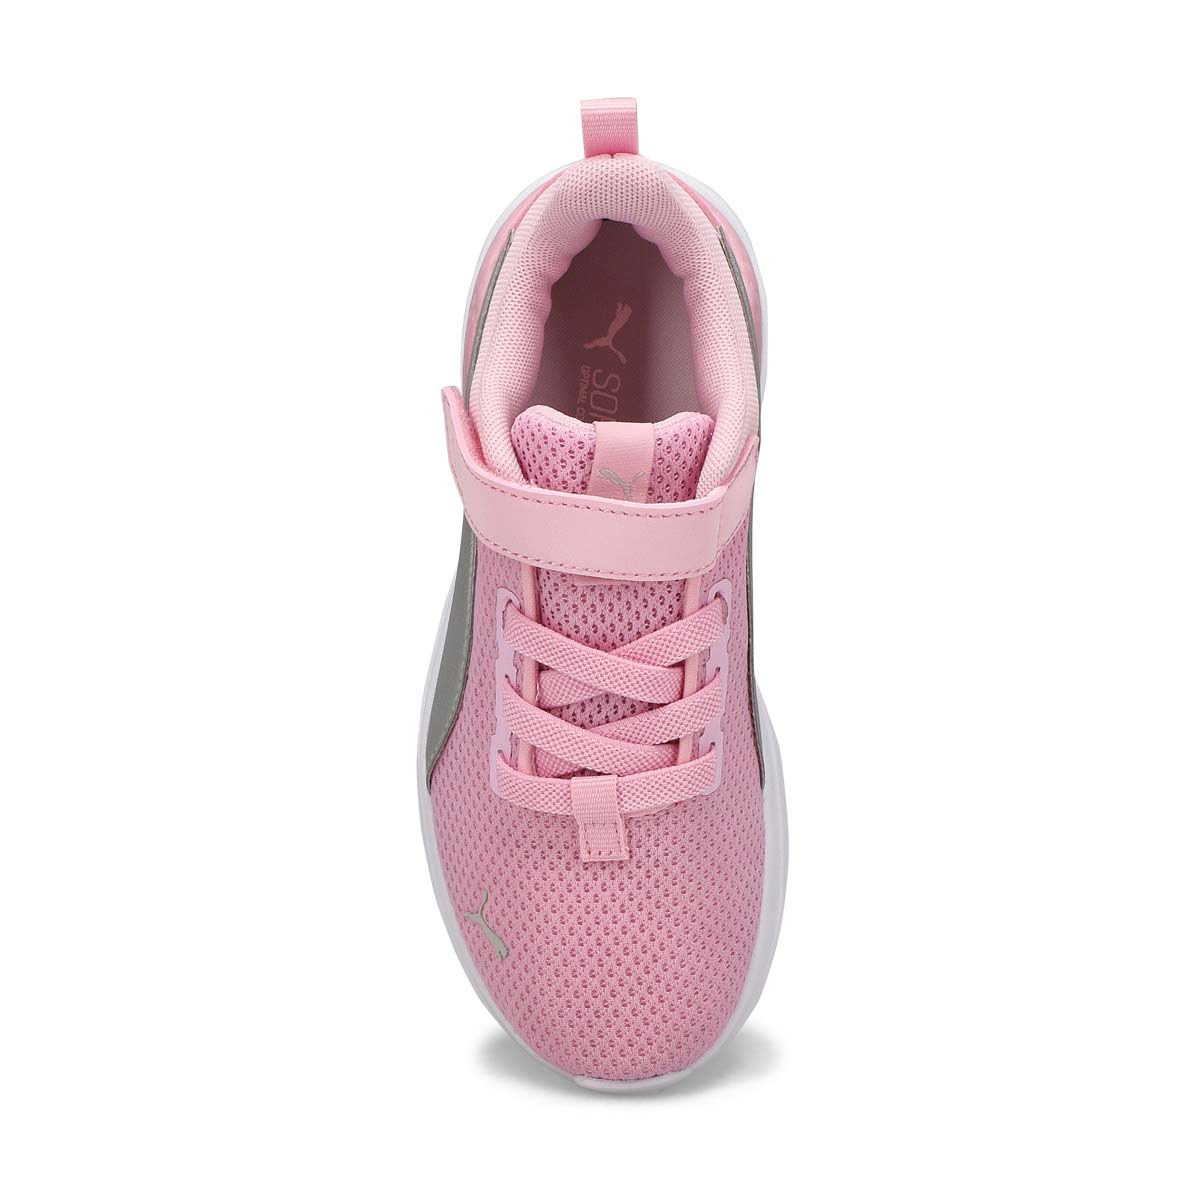 Girls Anzarun Lite AC PS Sneaker-Pink/Silver